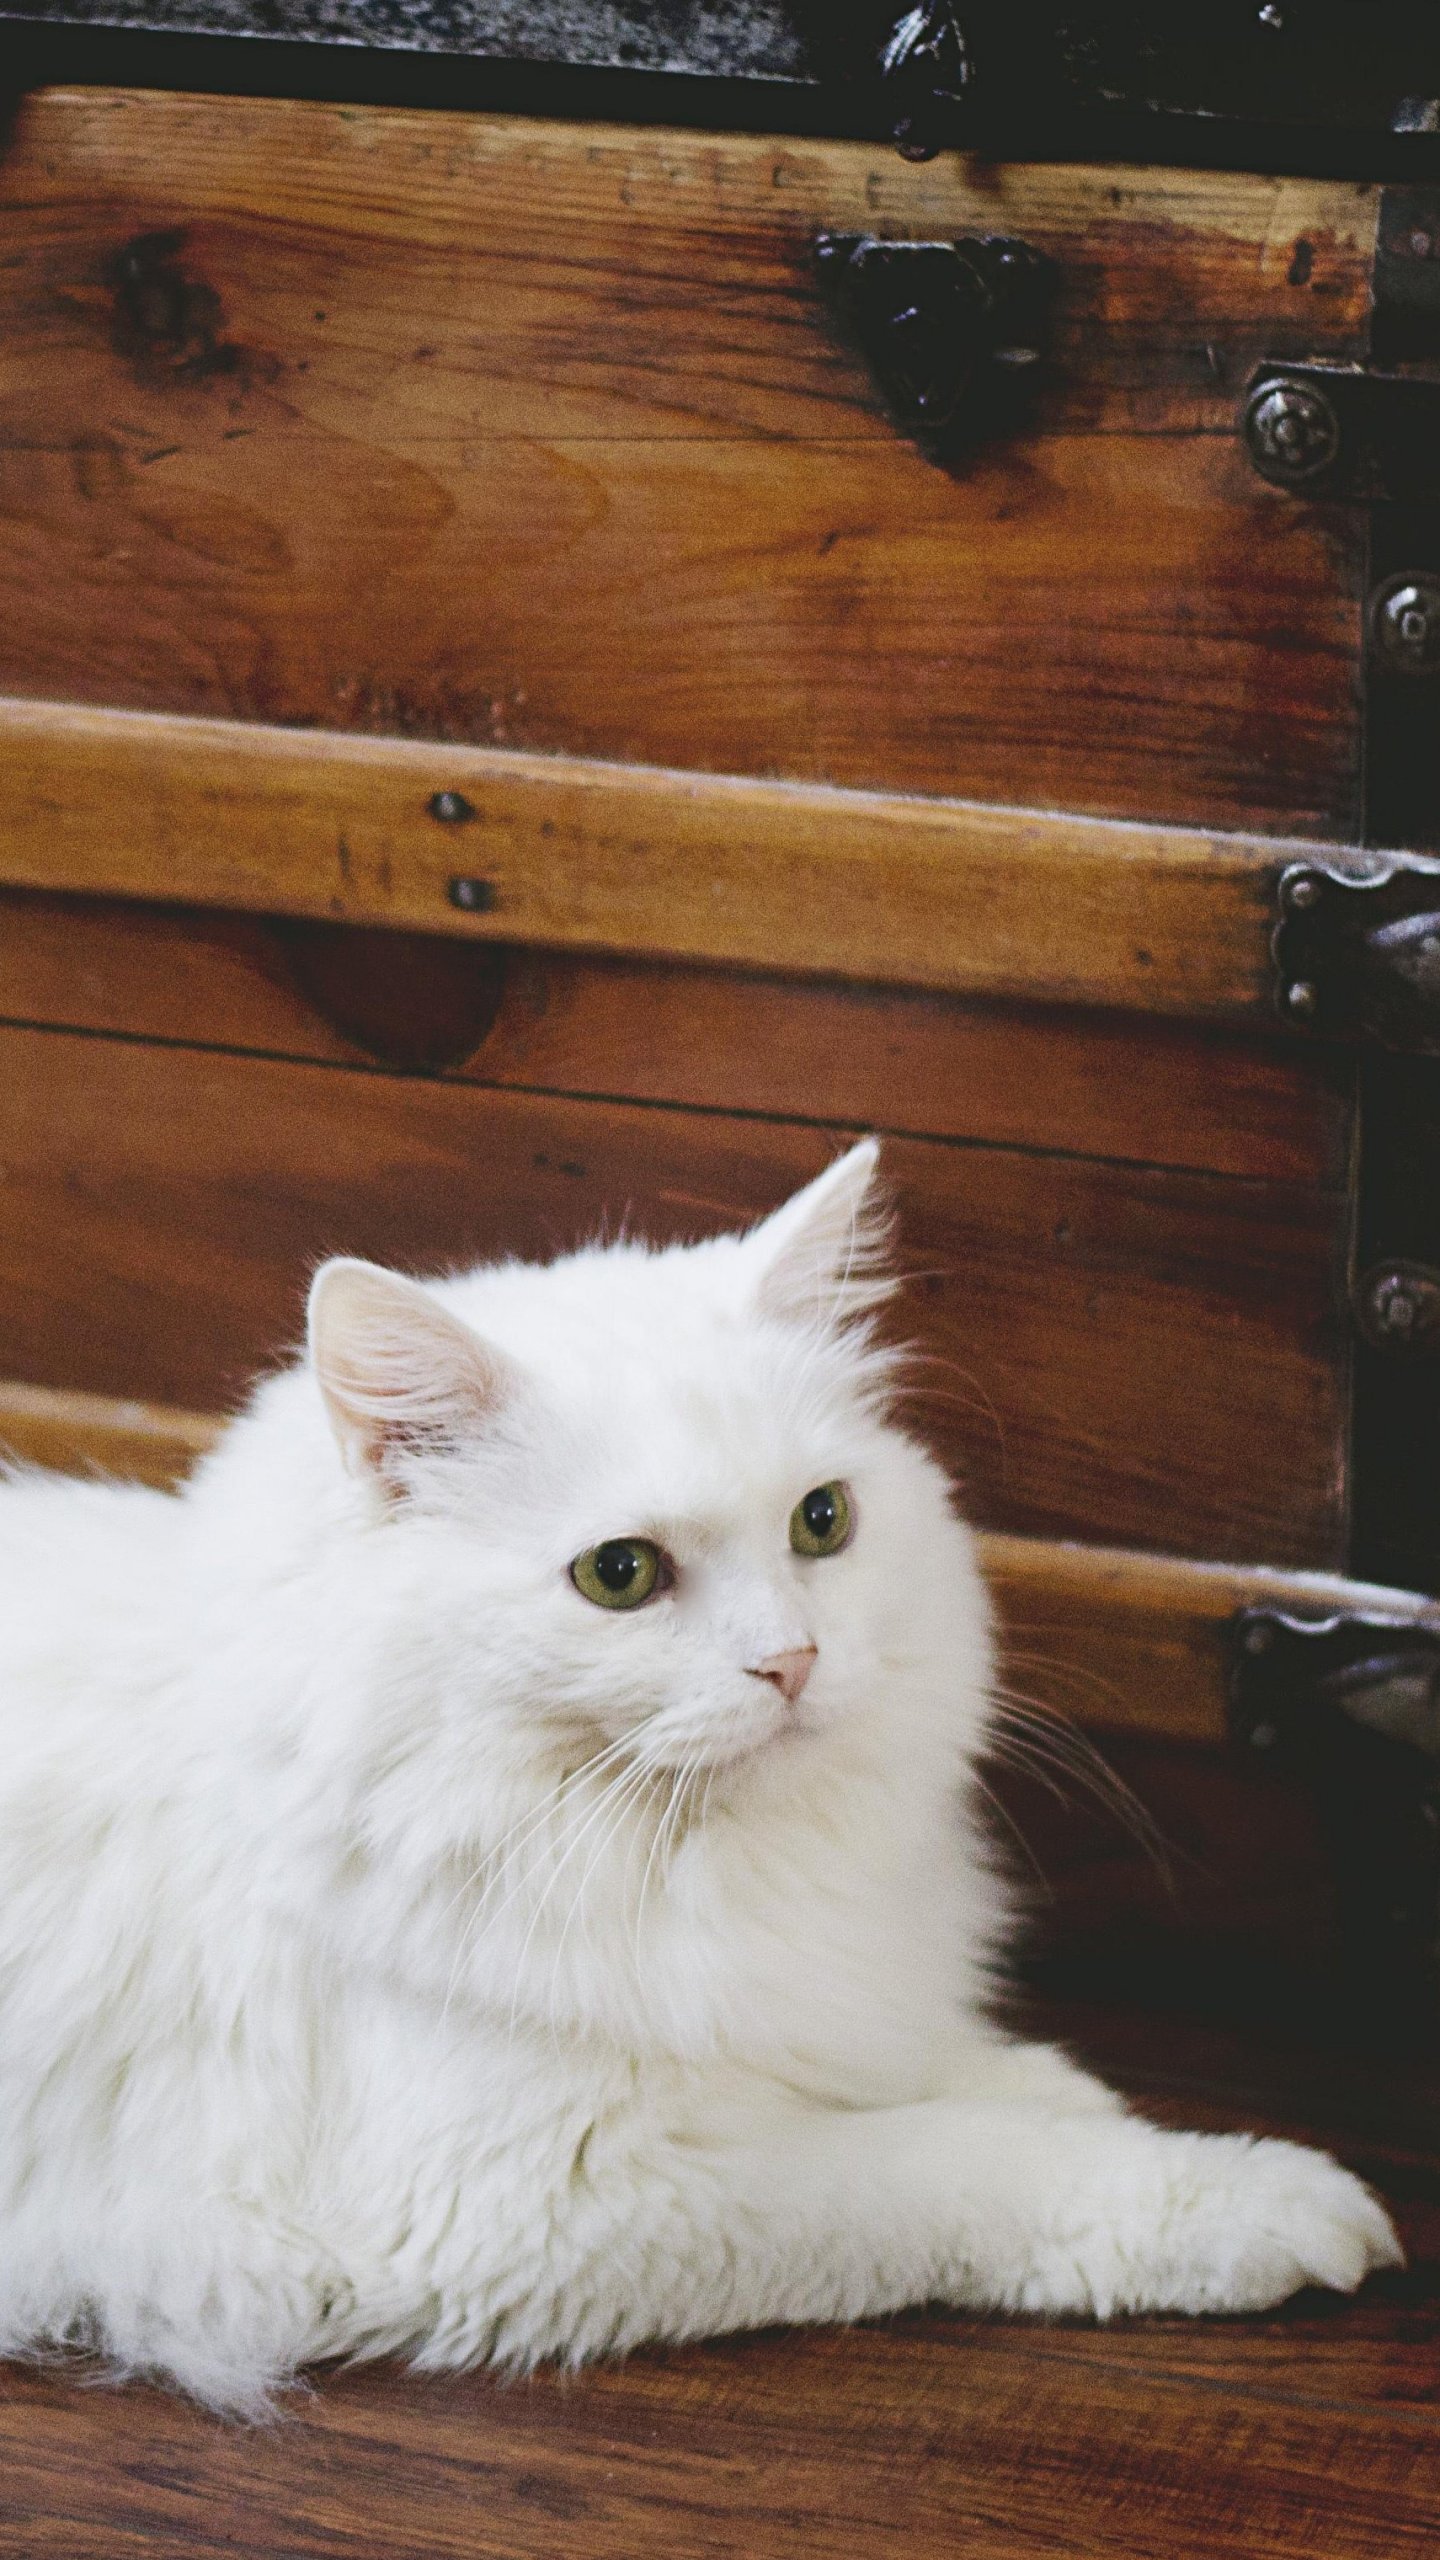 Elegant White Fluffy Cat Wallpaper - iPhone, Android & Desktop Backgrounds